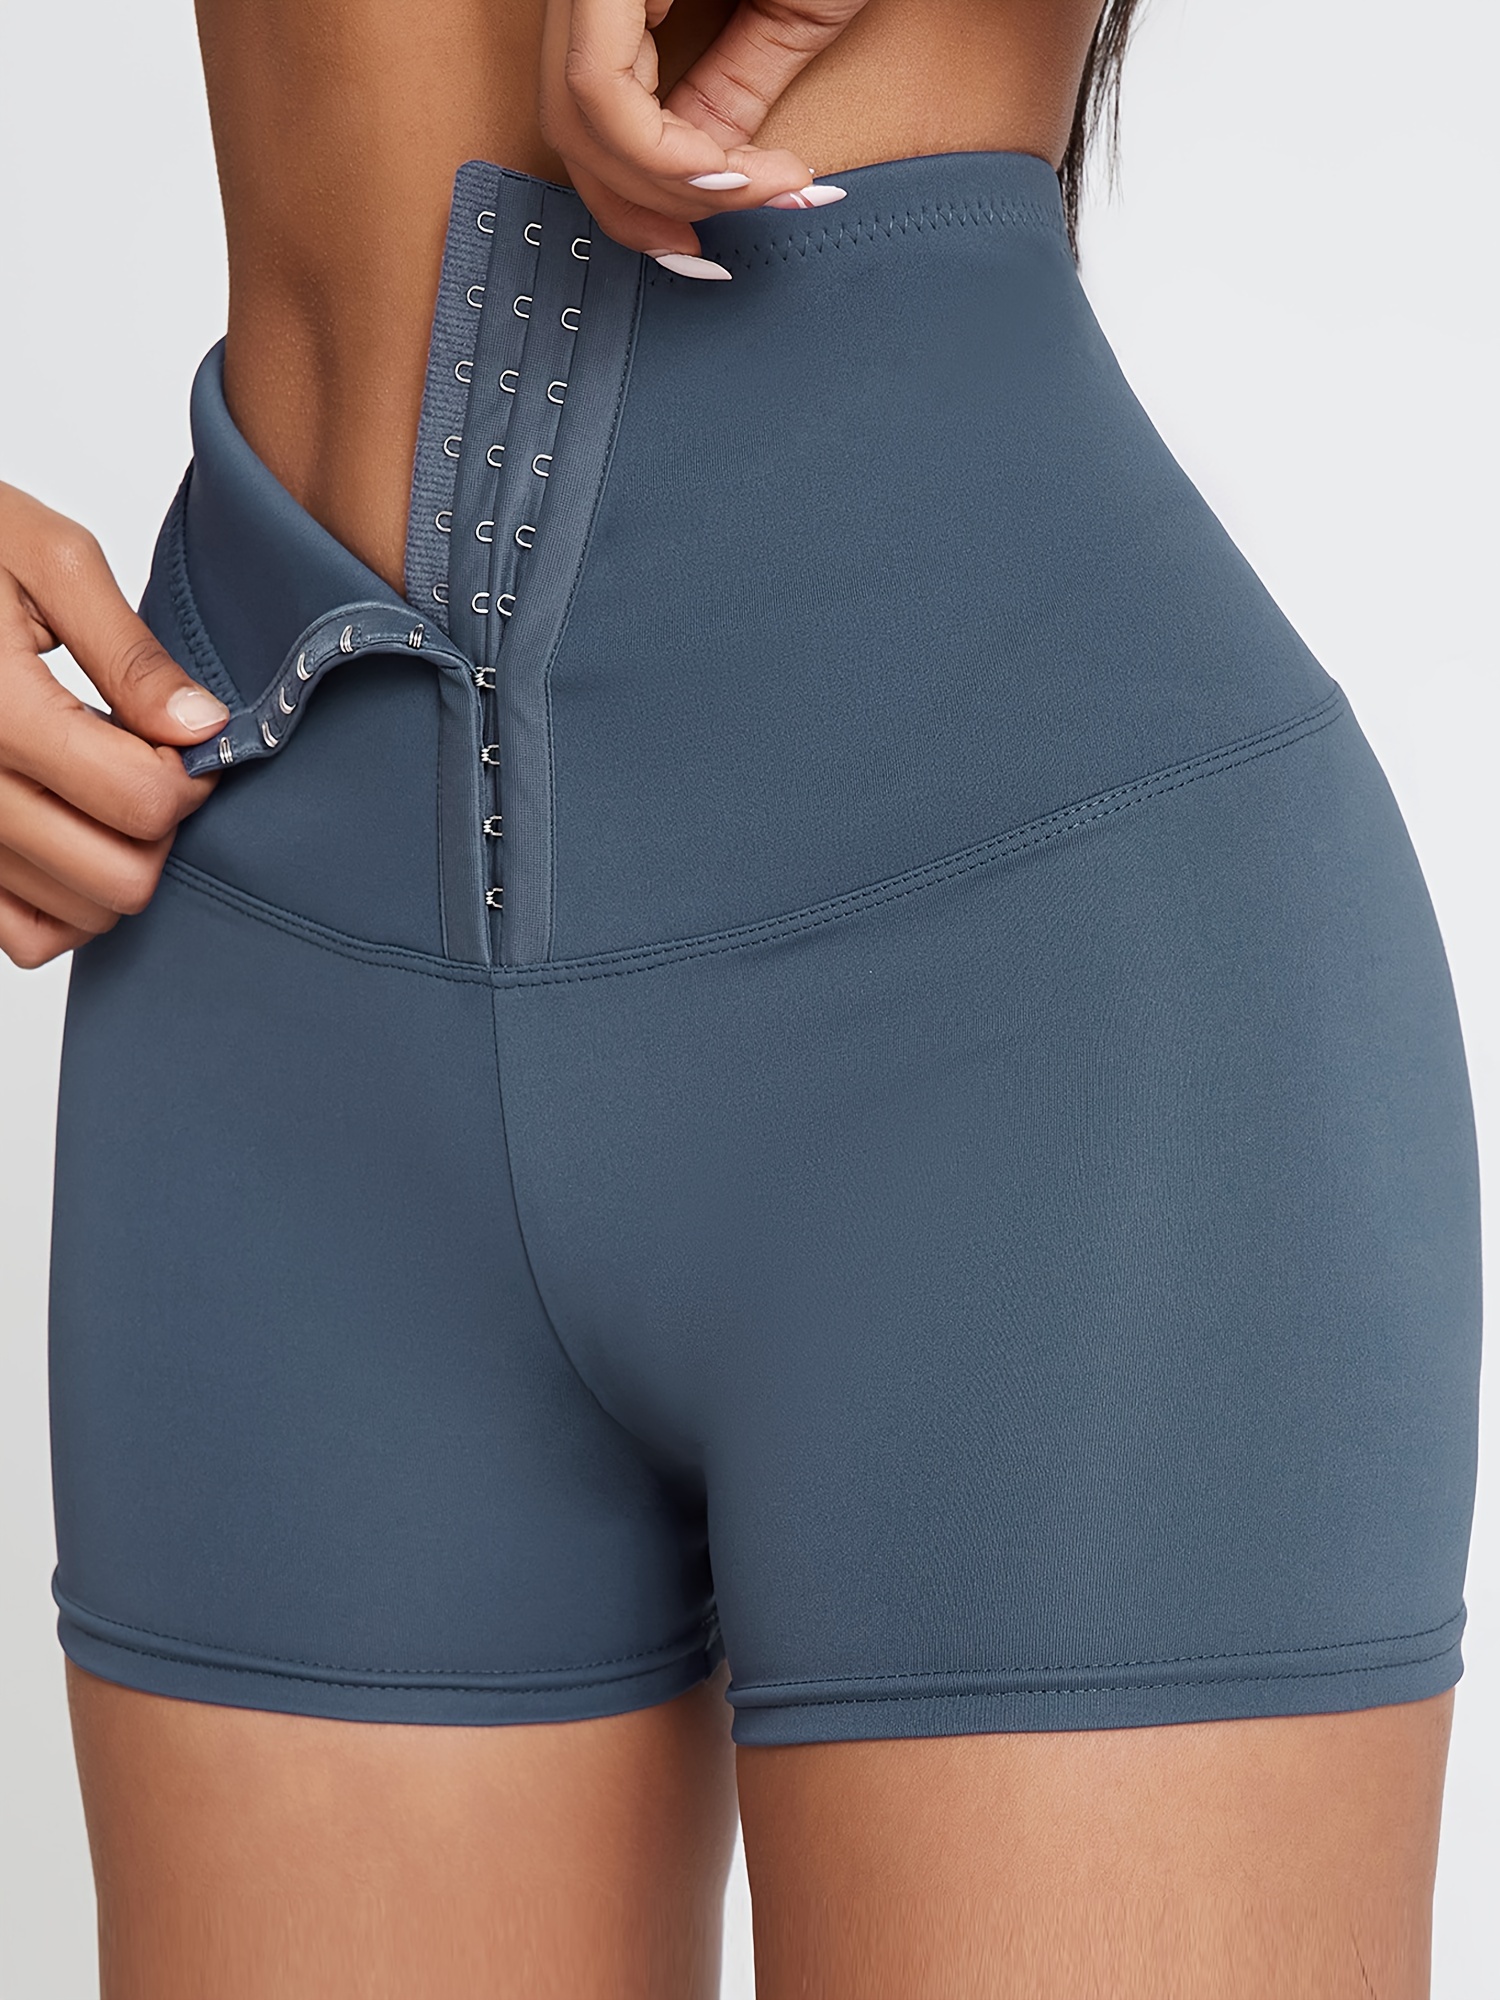 Compre Shorts femininos de ioga com controle de barriga, shorts de